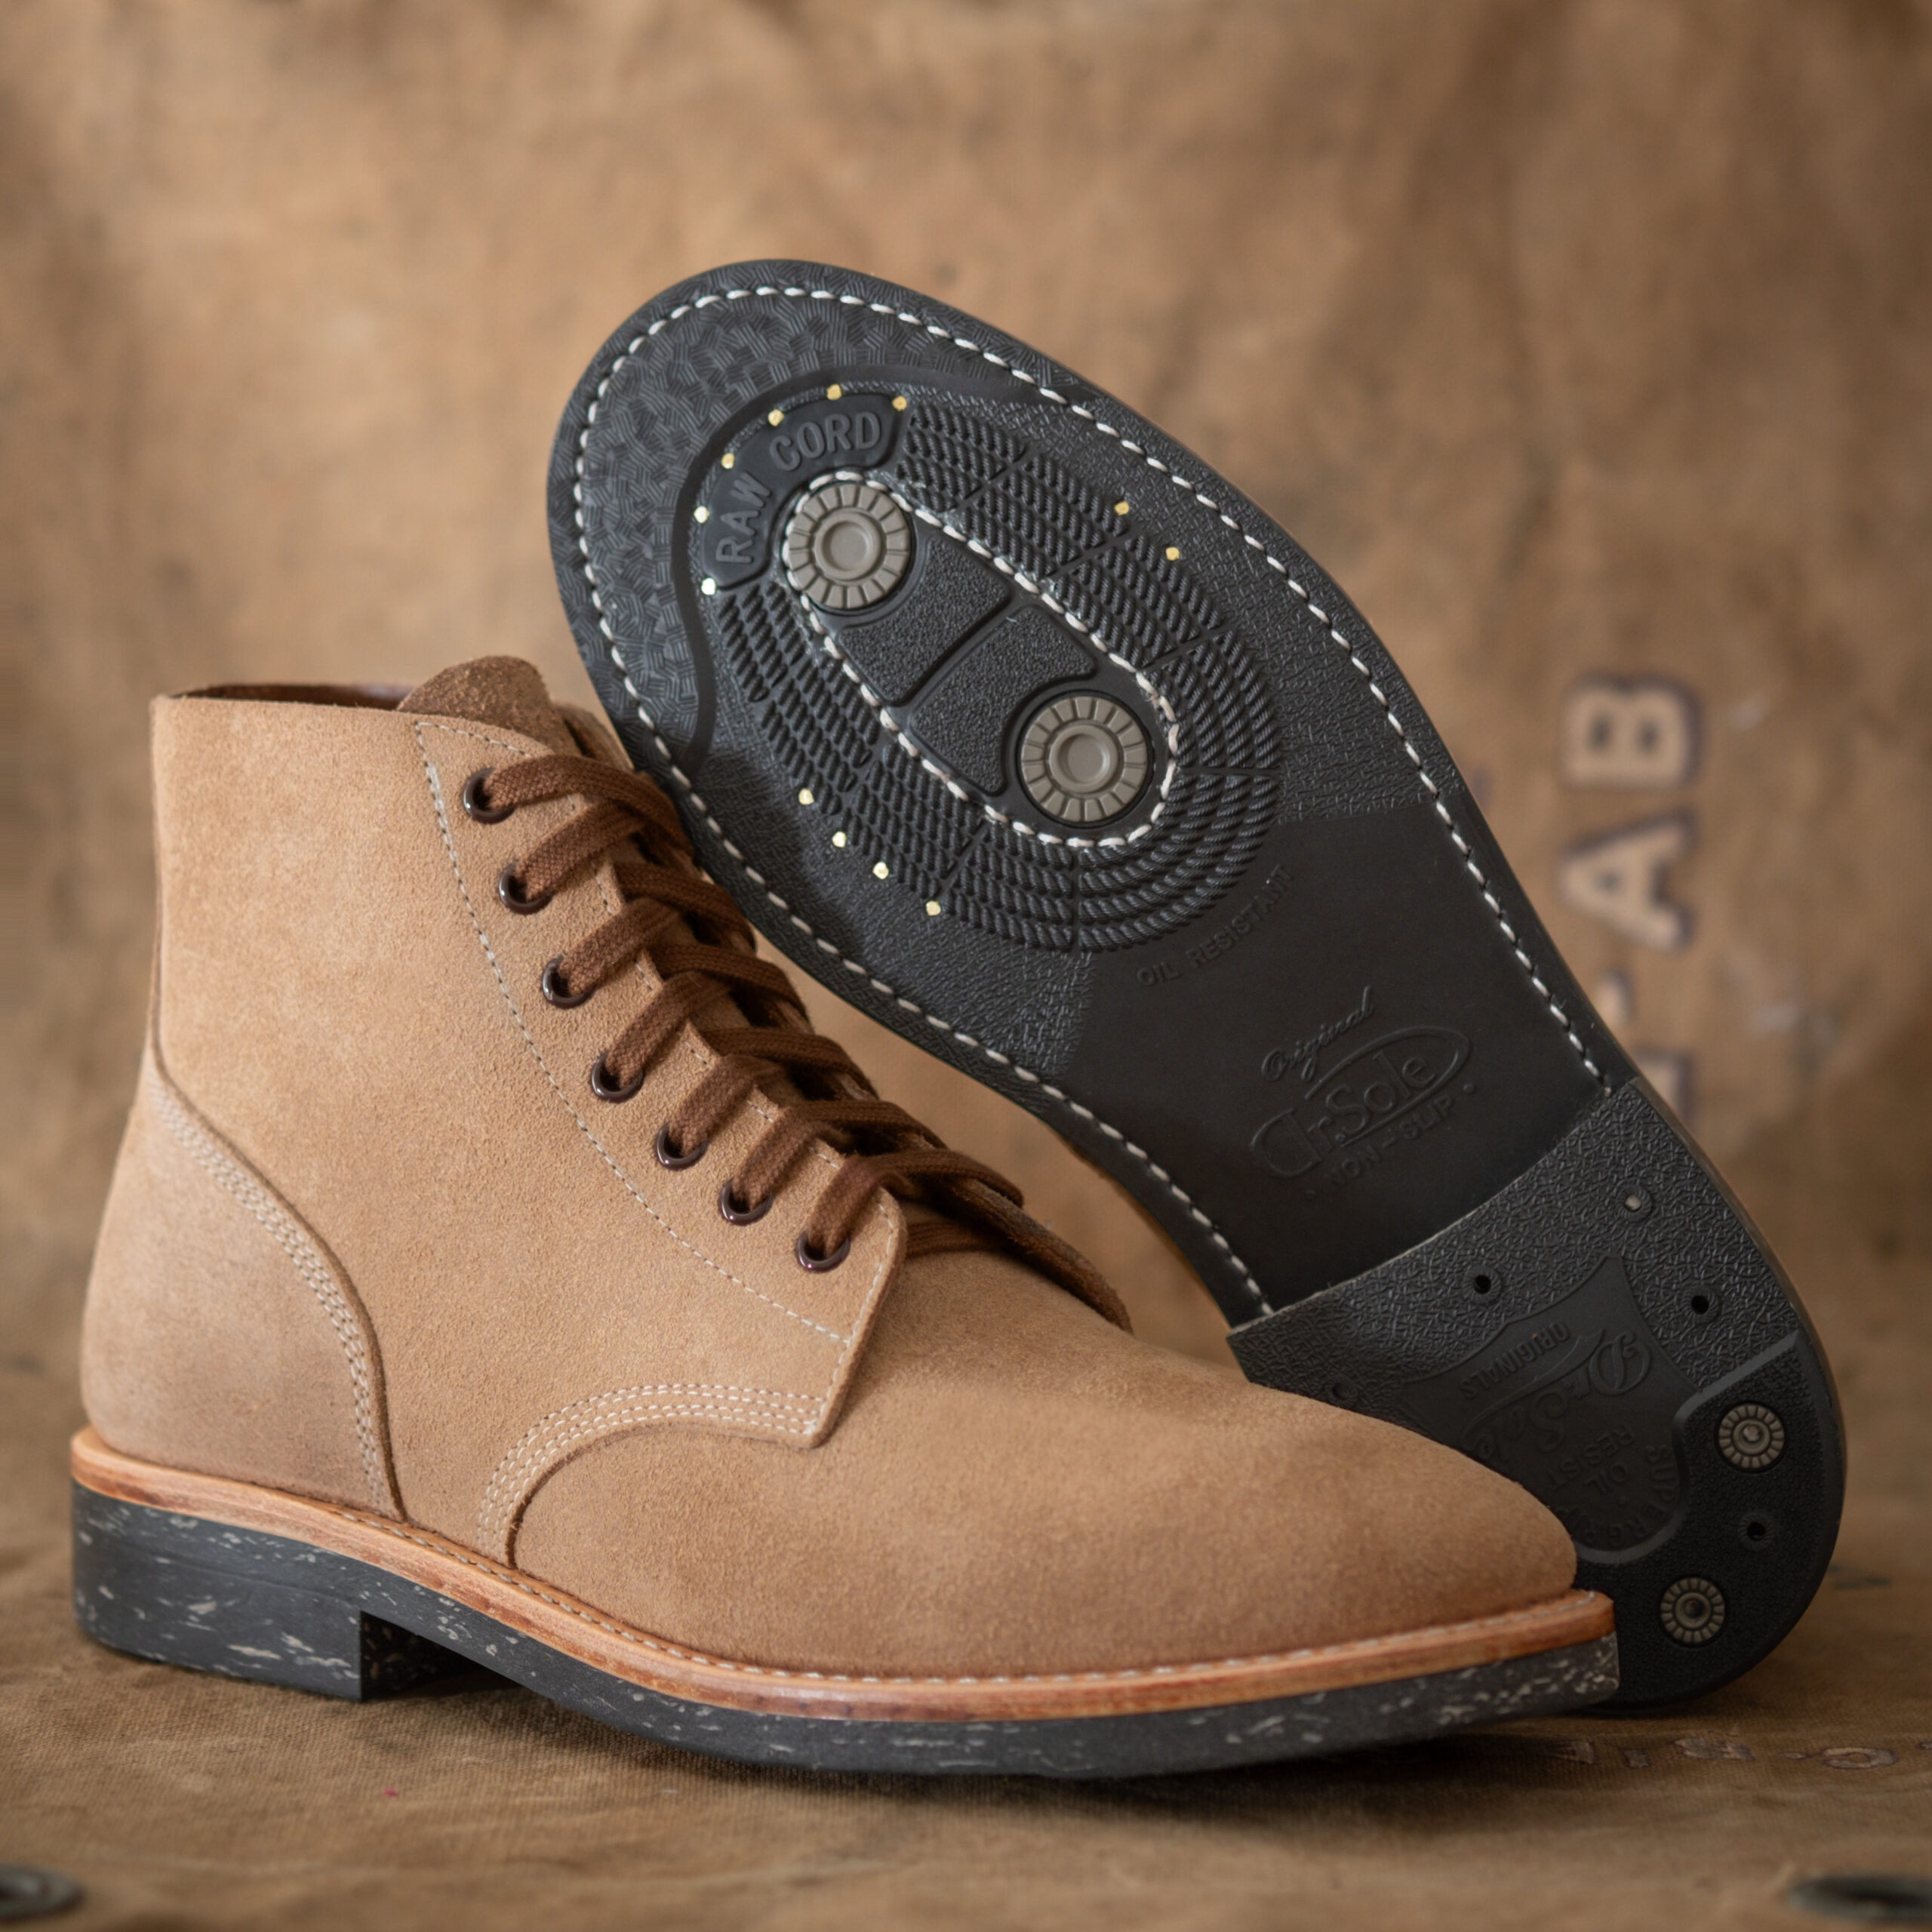 oak street bootmakers n-1 field shoe natural chromexcel roughout marine field